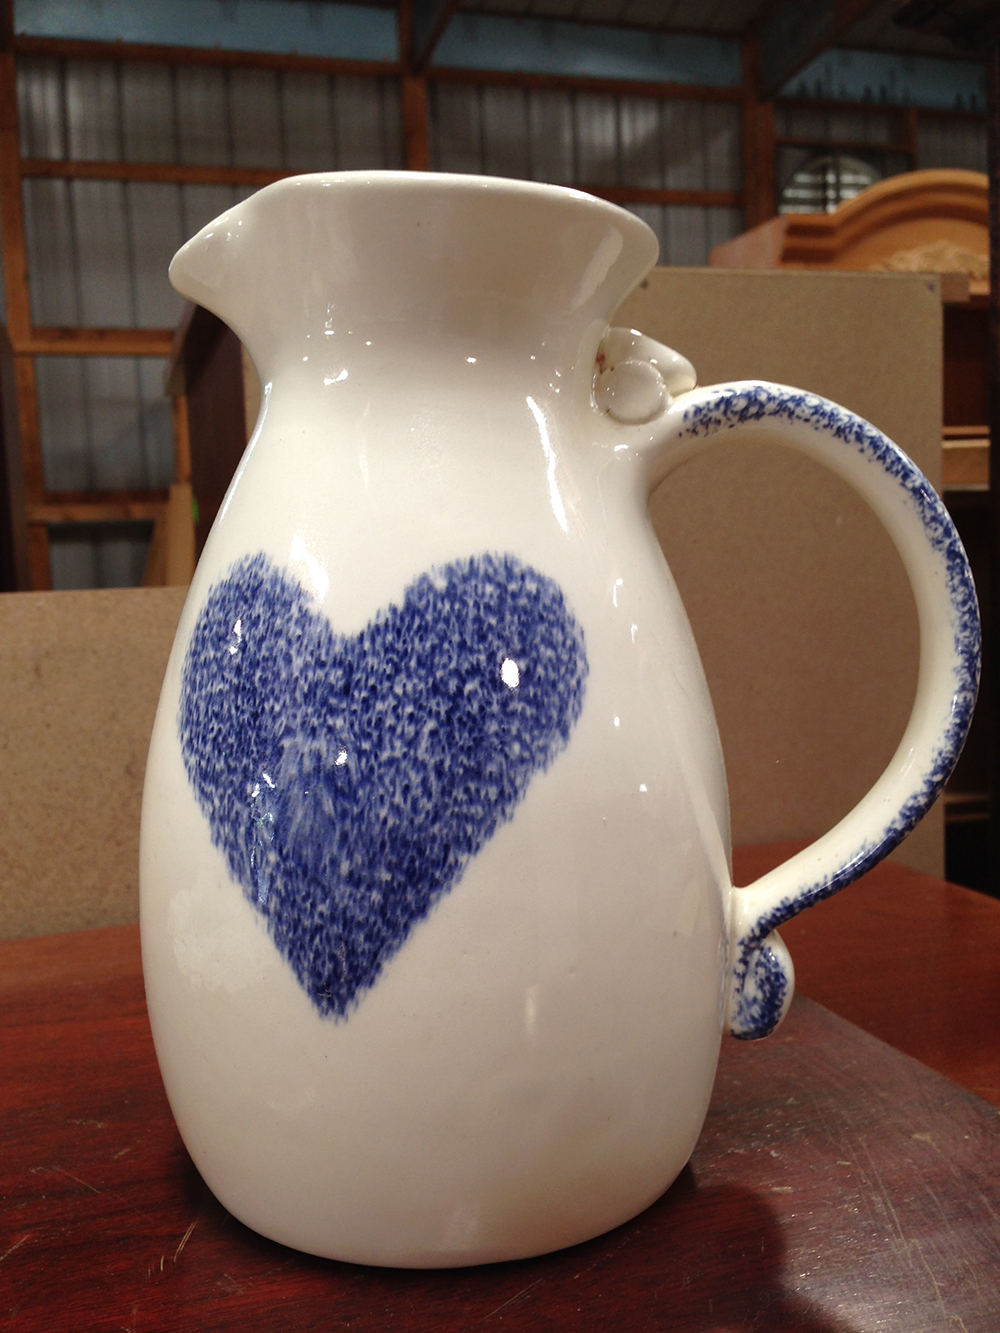 Sponge painted Heart Love ceramic pitcher - Art Inspiration